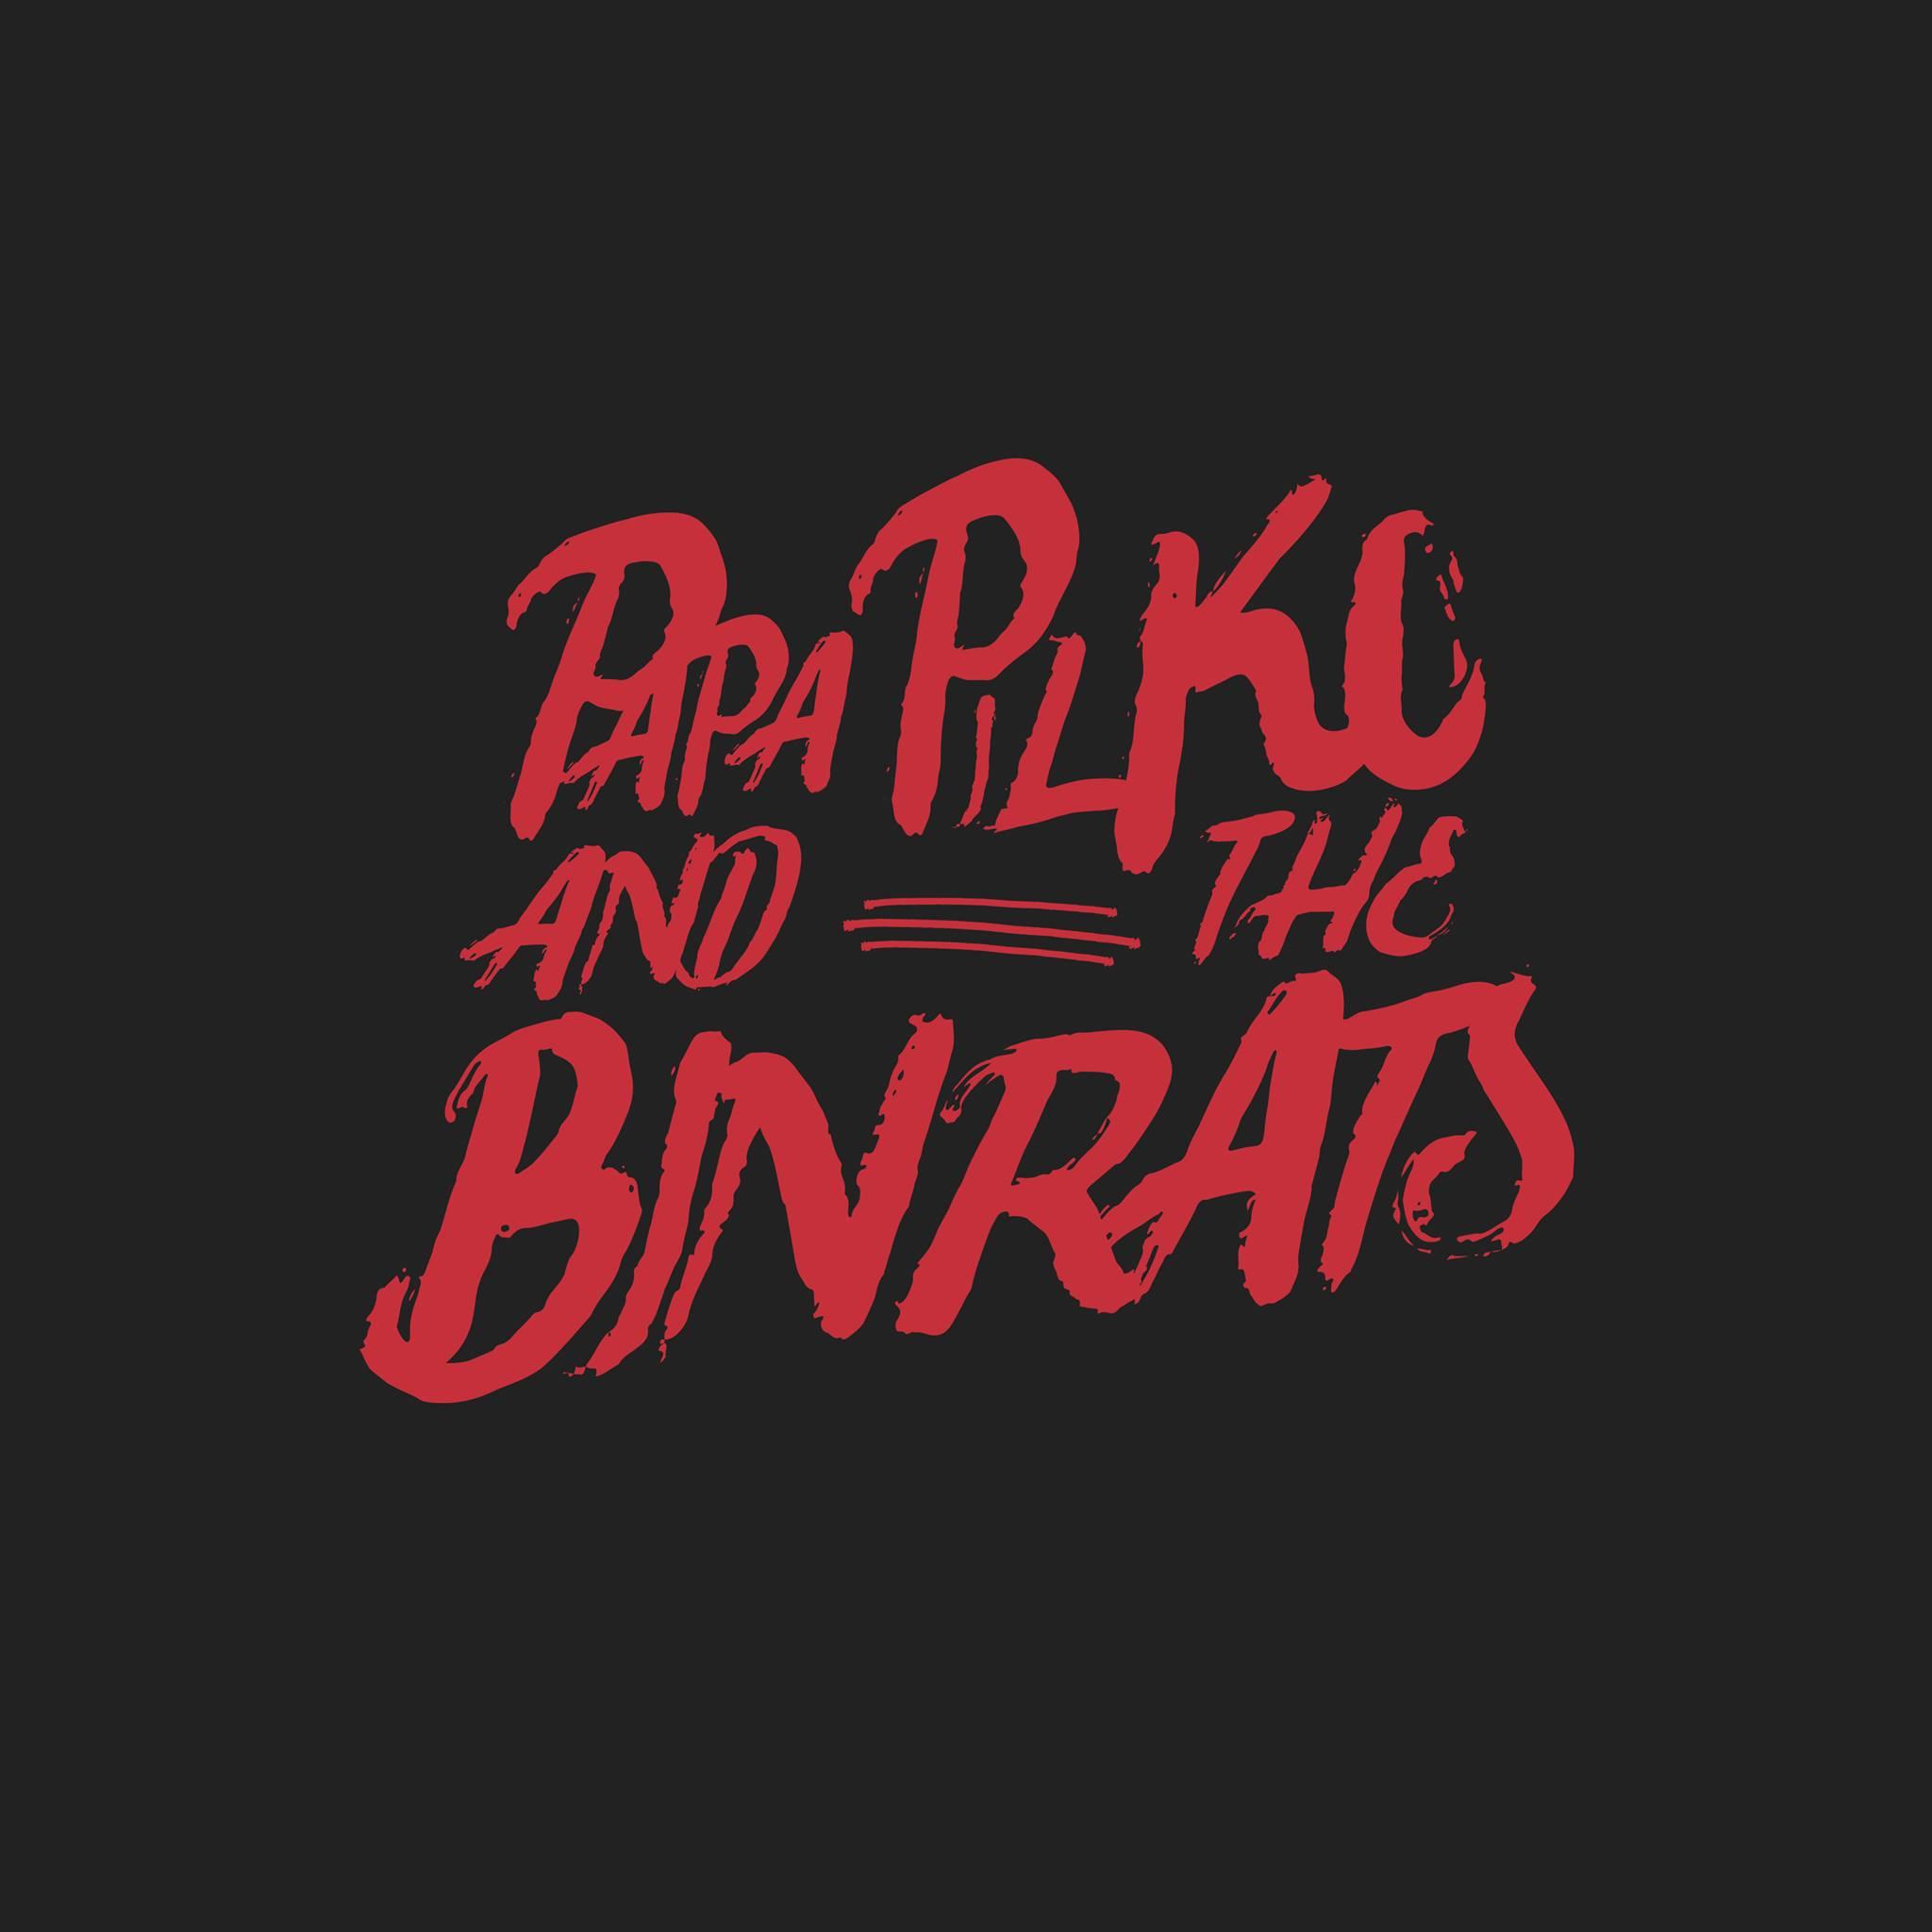 Papa Pilko And The Binrats